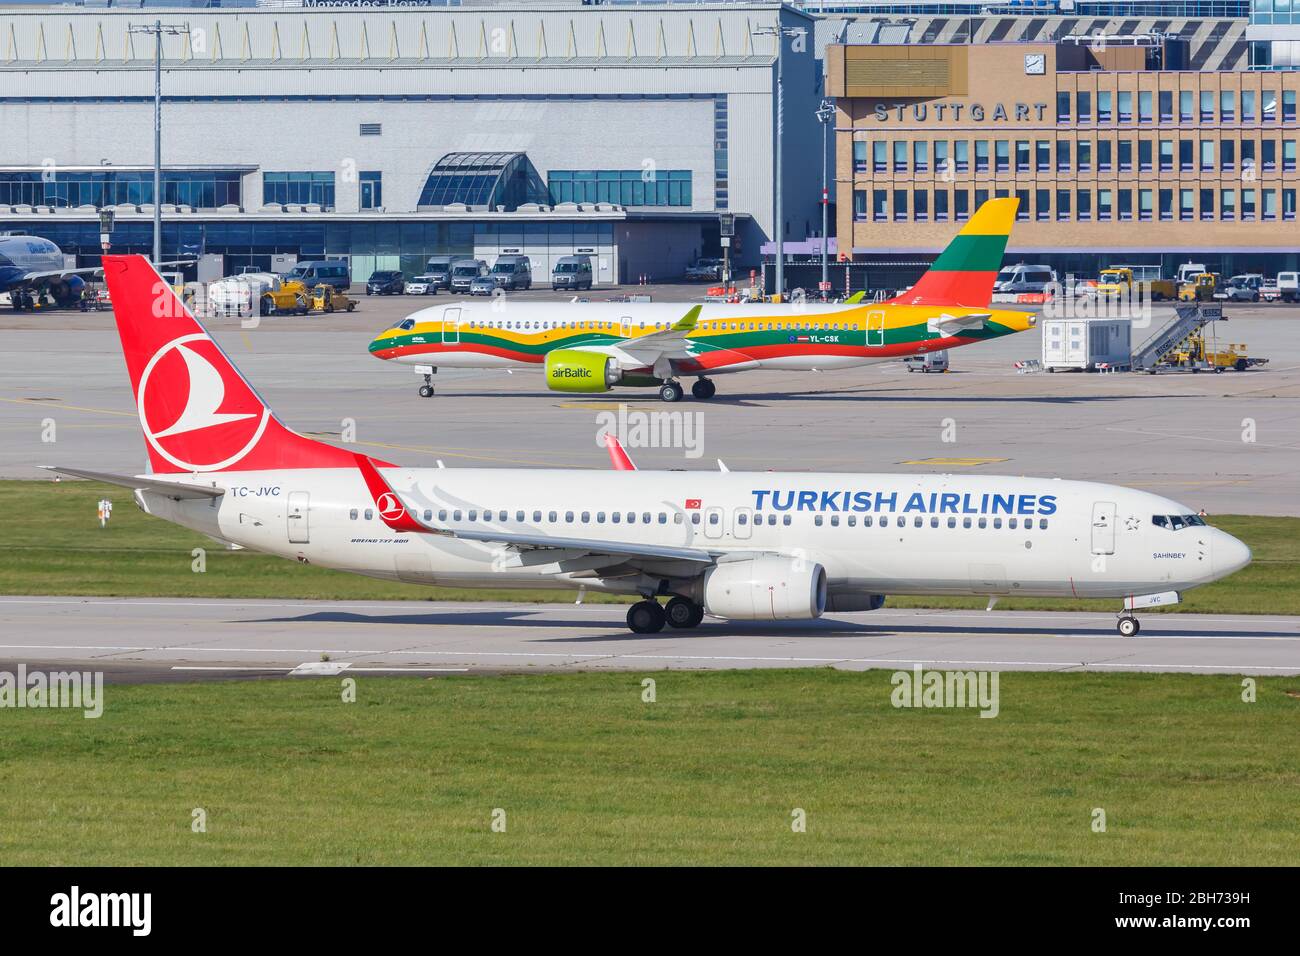 Stuttgart, Germany – October 20, 2019: Turkish Airlines Boeing 737 airplane at Stuttgart airport (STR) in Germany. Stock Photo